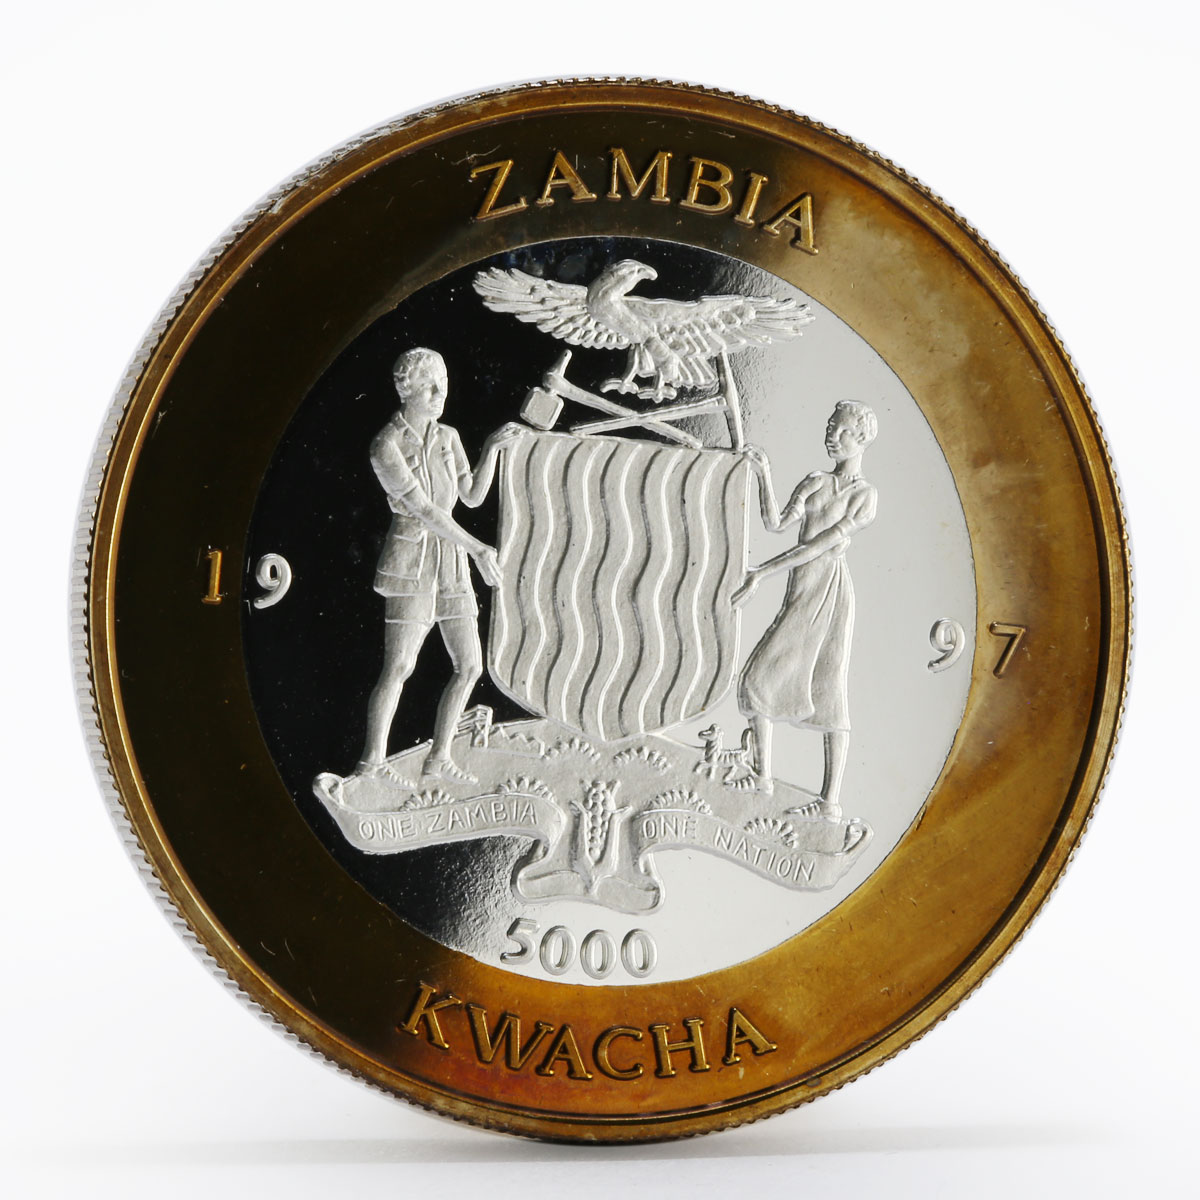 Zambia 5000 kwacha Chinese General Wang Shushengi bimetalic coin 1997